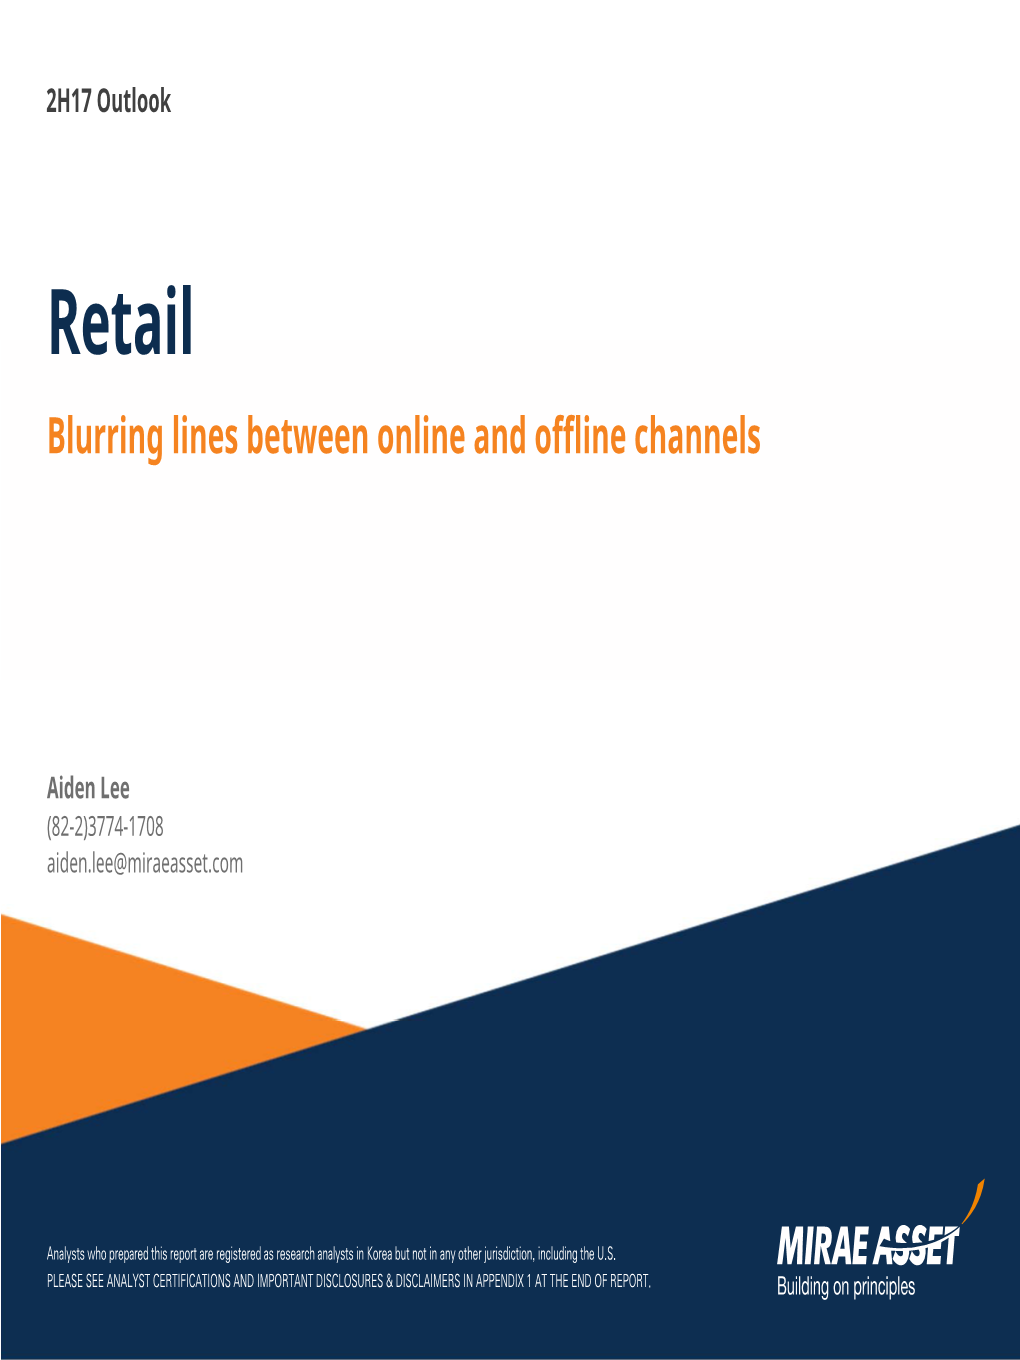 Retail Blurring Lines Between Online and Offline Channels